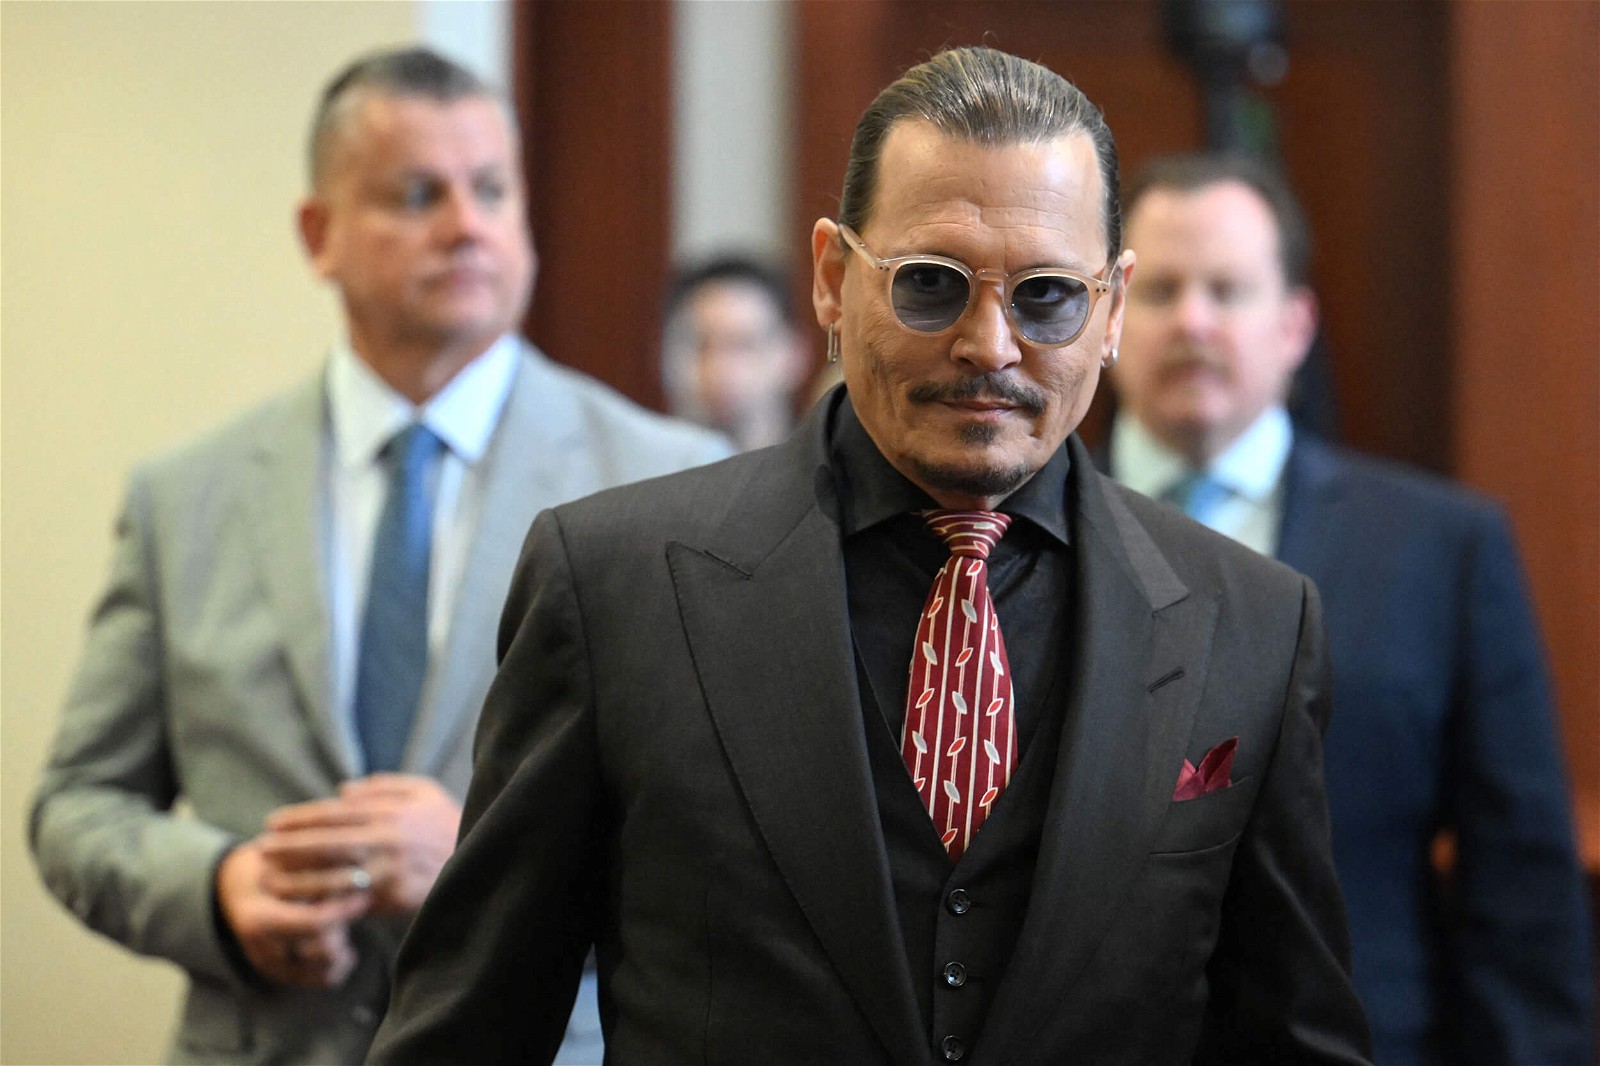 Johnny Depp at the defamation trial